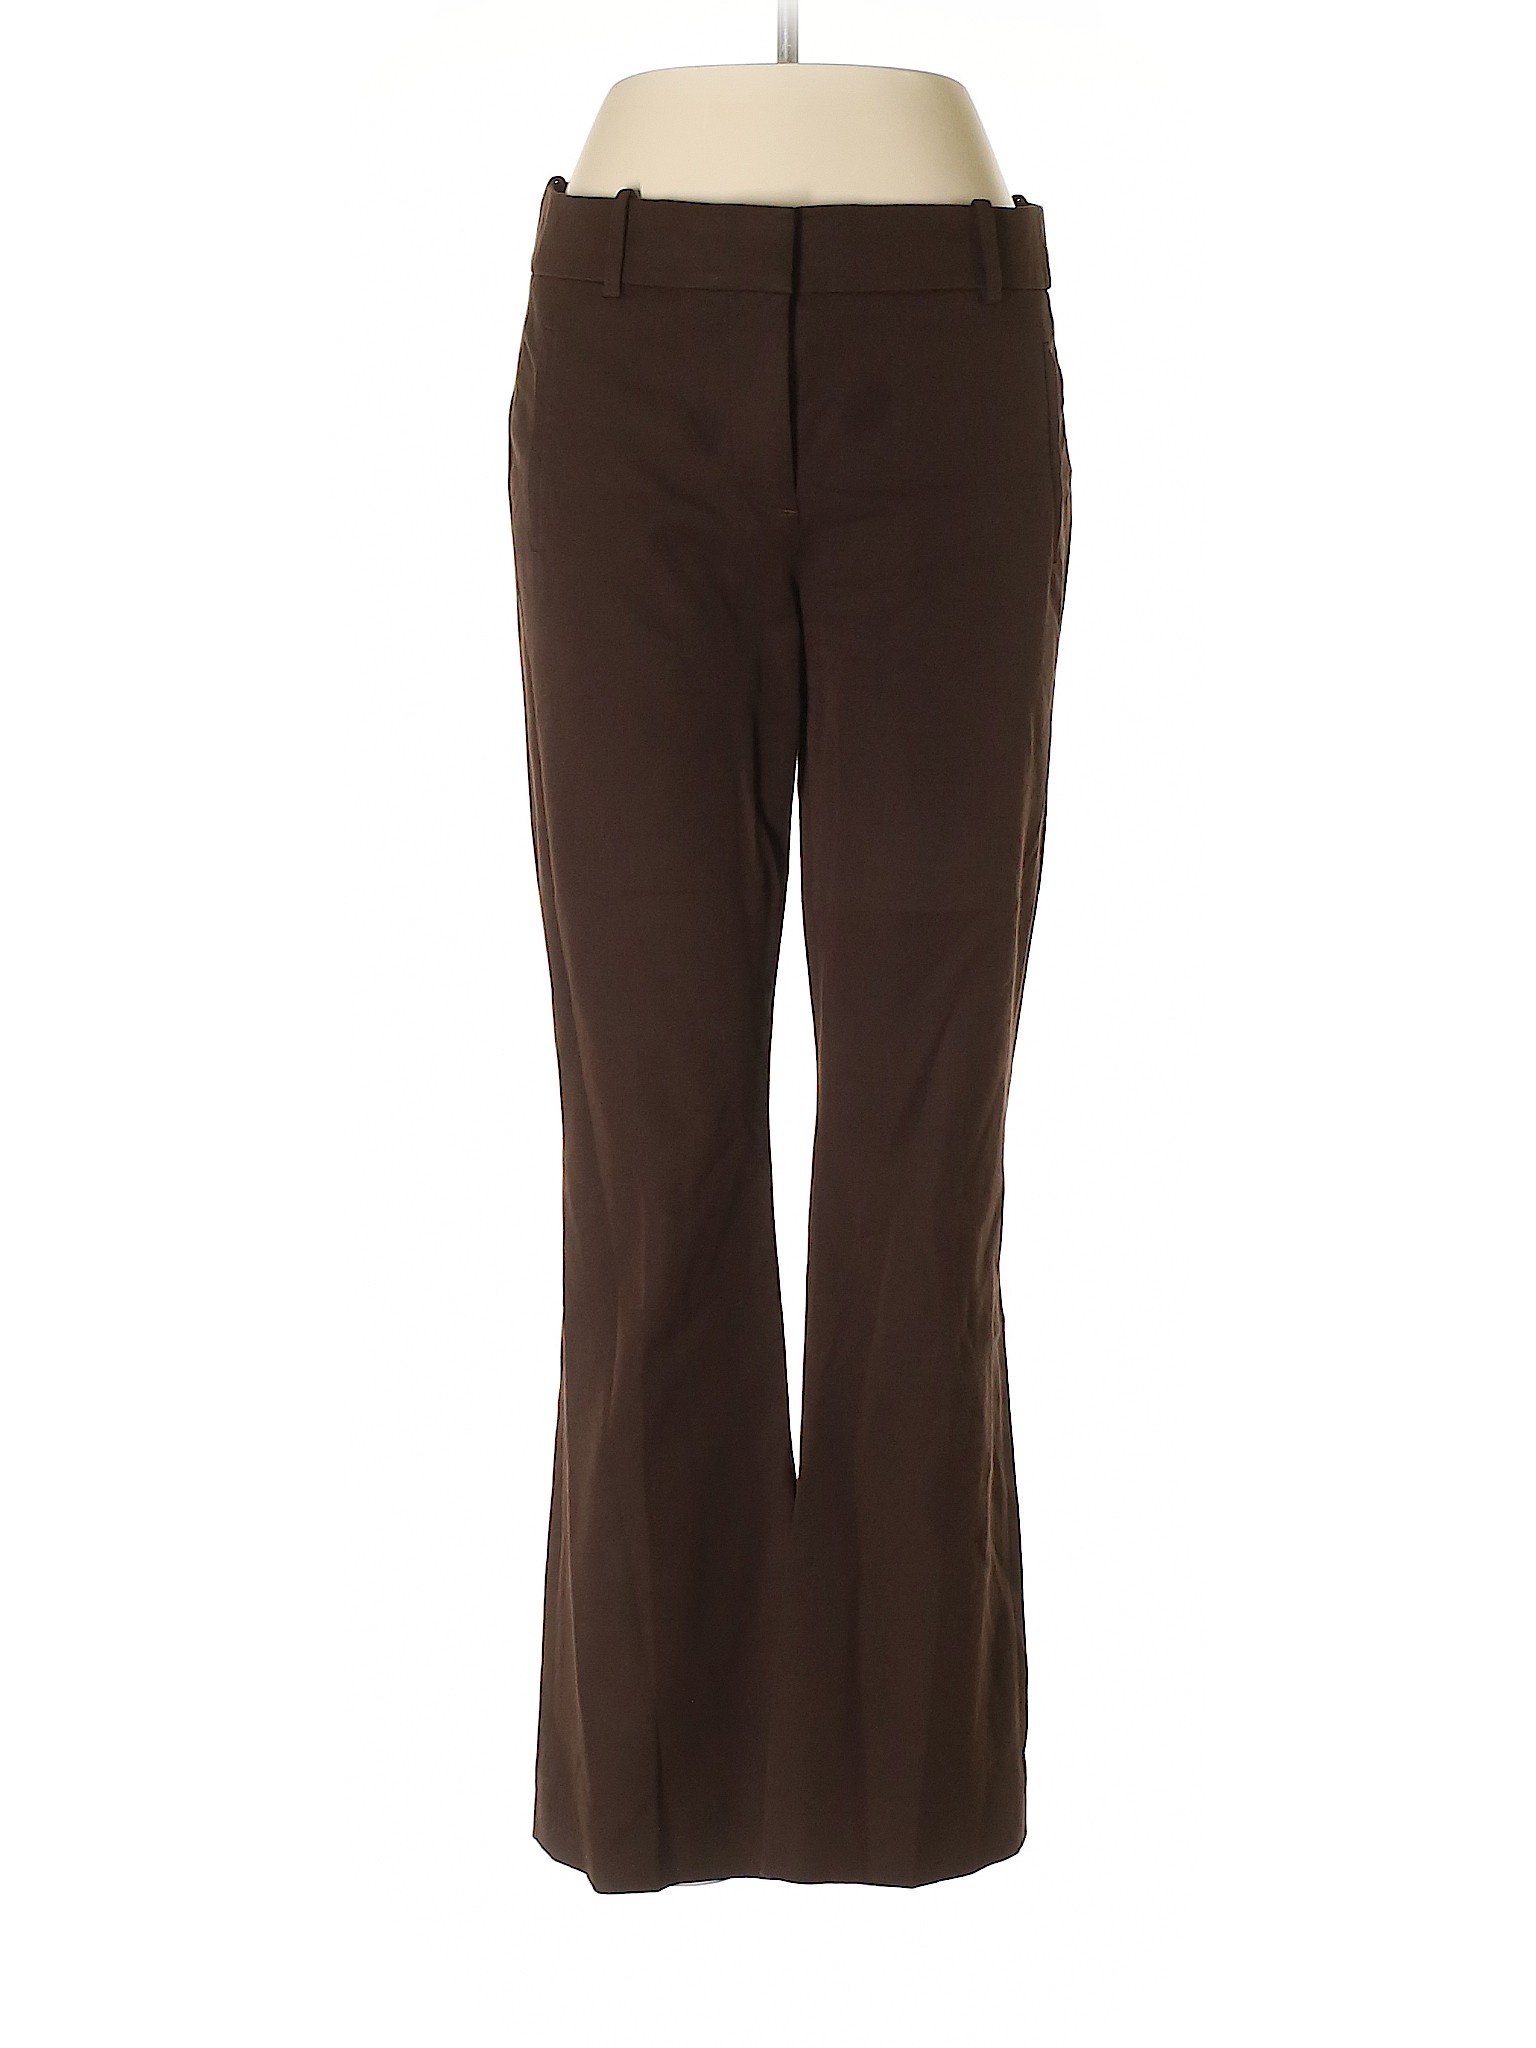 J.Crew Women Brown Dress Pants 2 Tall | eBay